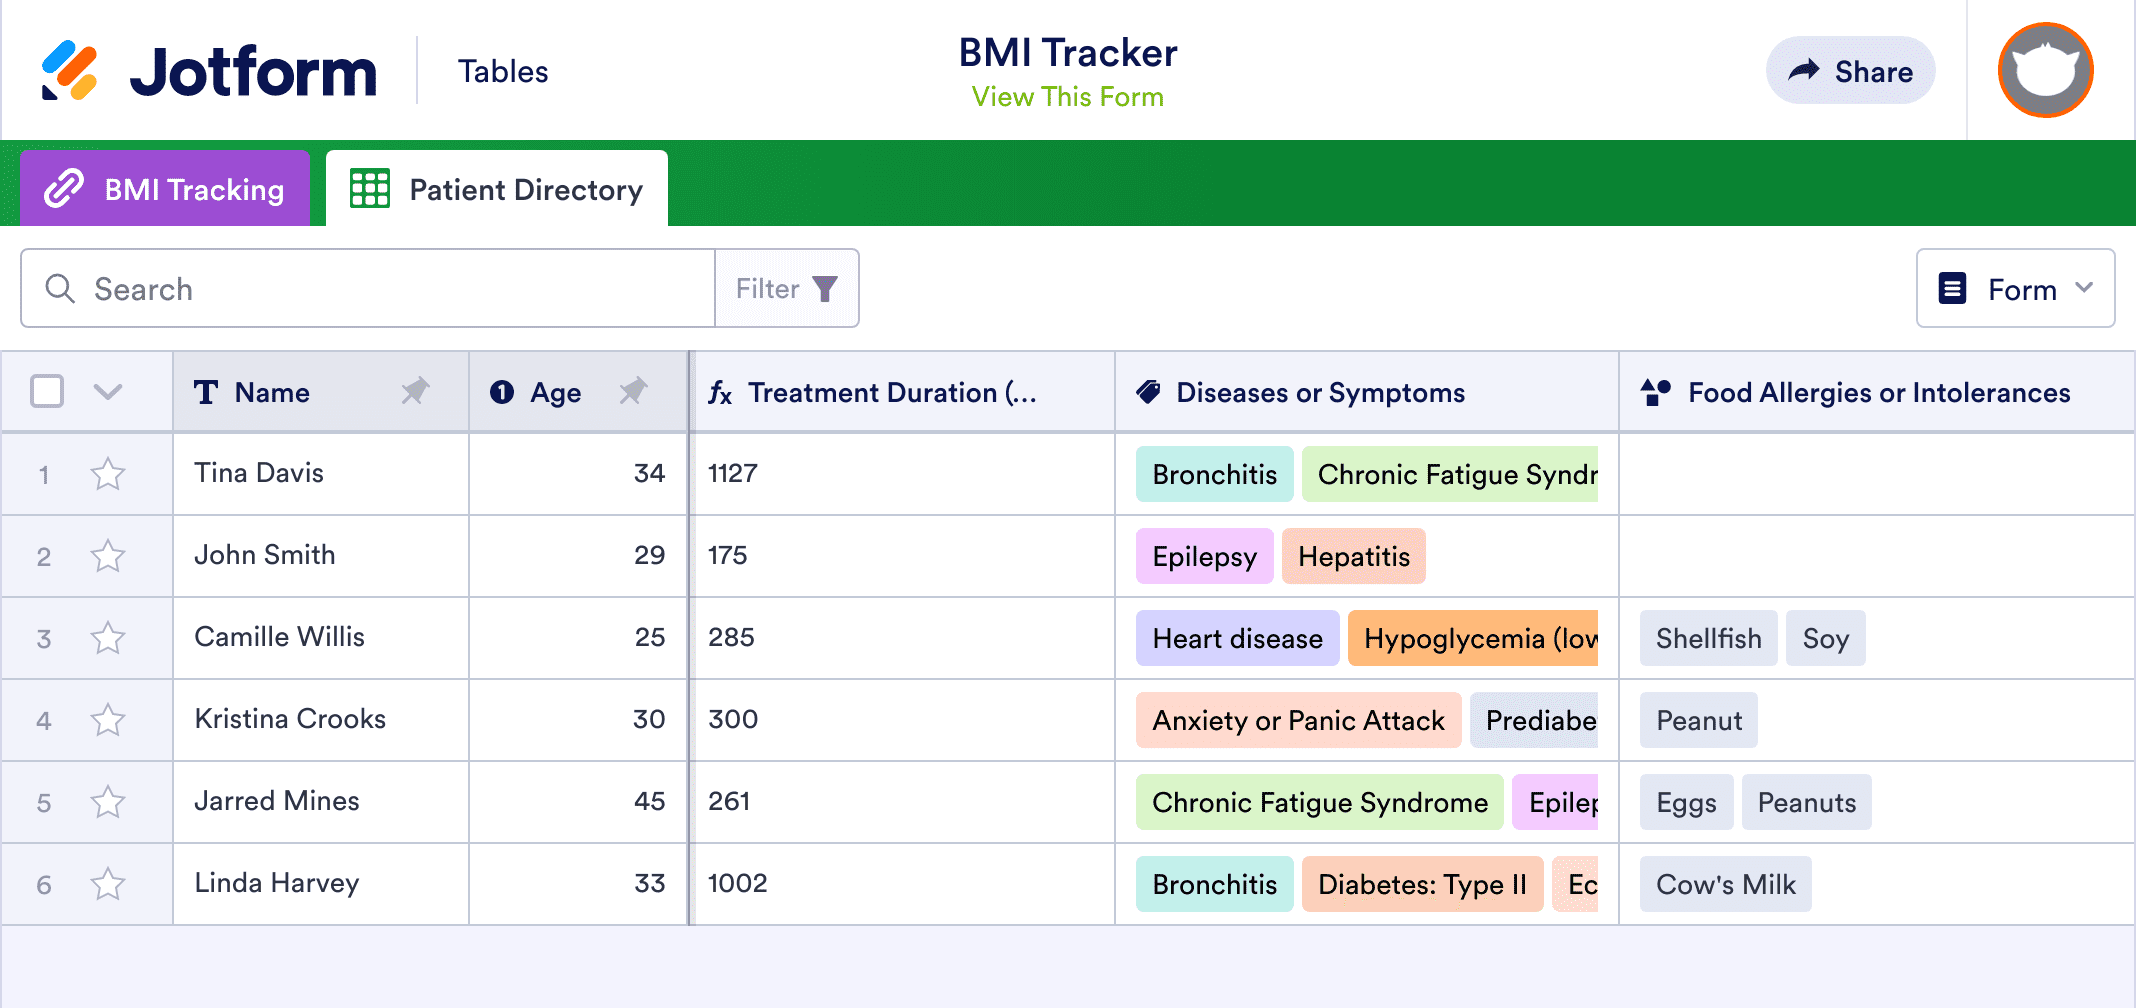 BMI Tracker Template | Jotform Tables